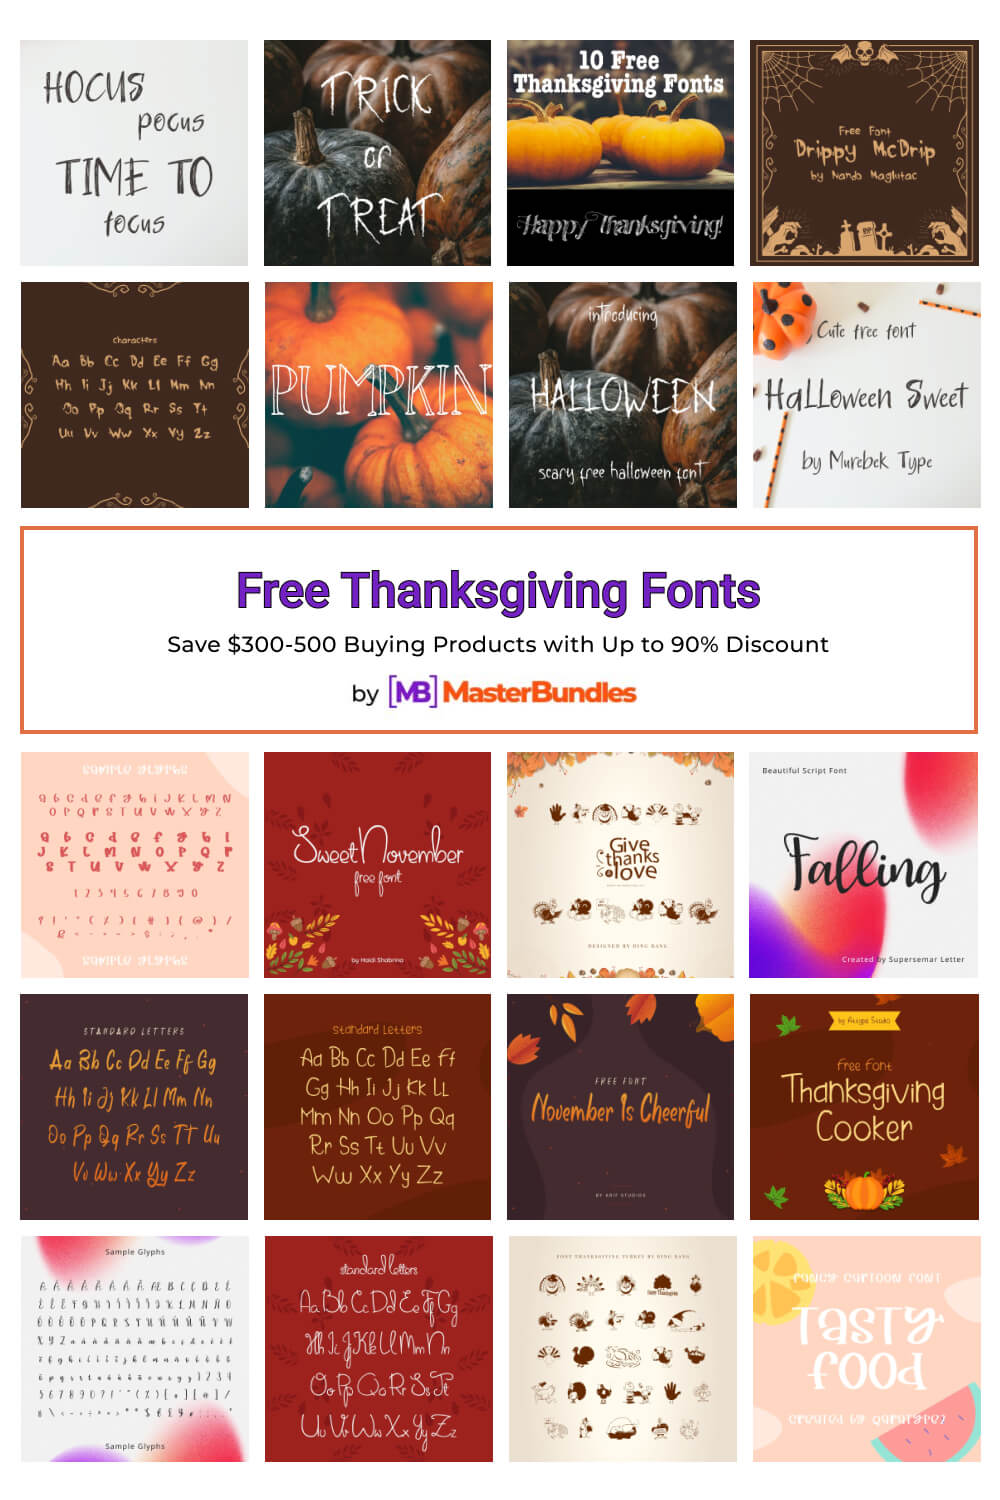 free thanksgiving fonts pinterest image.